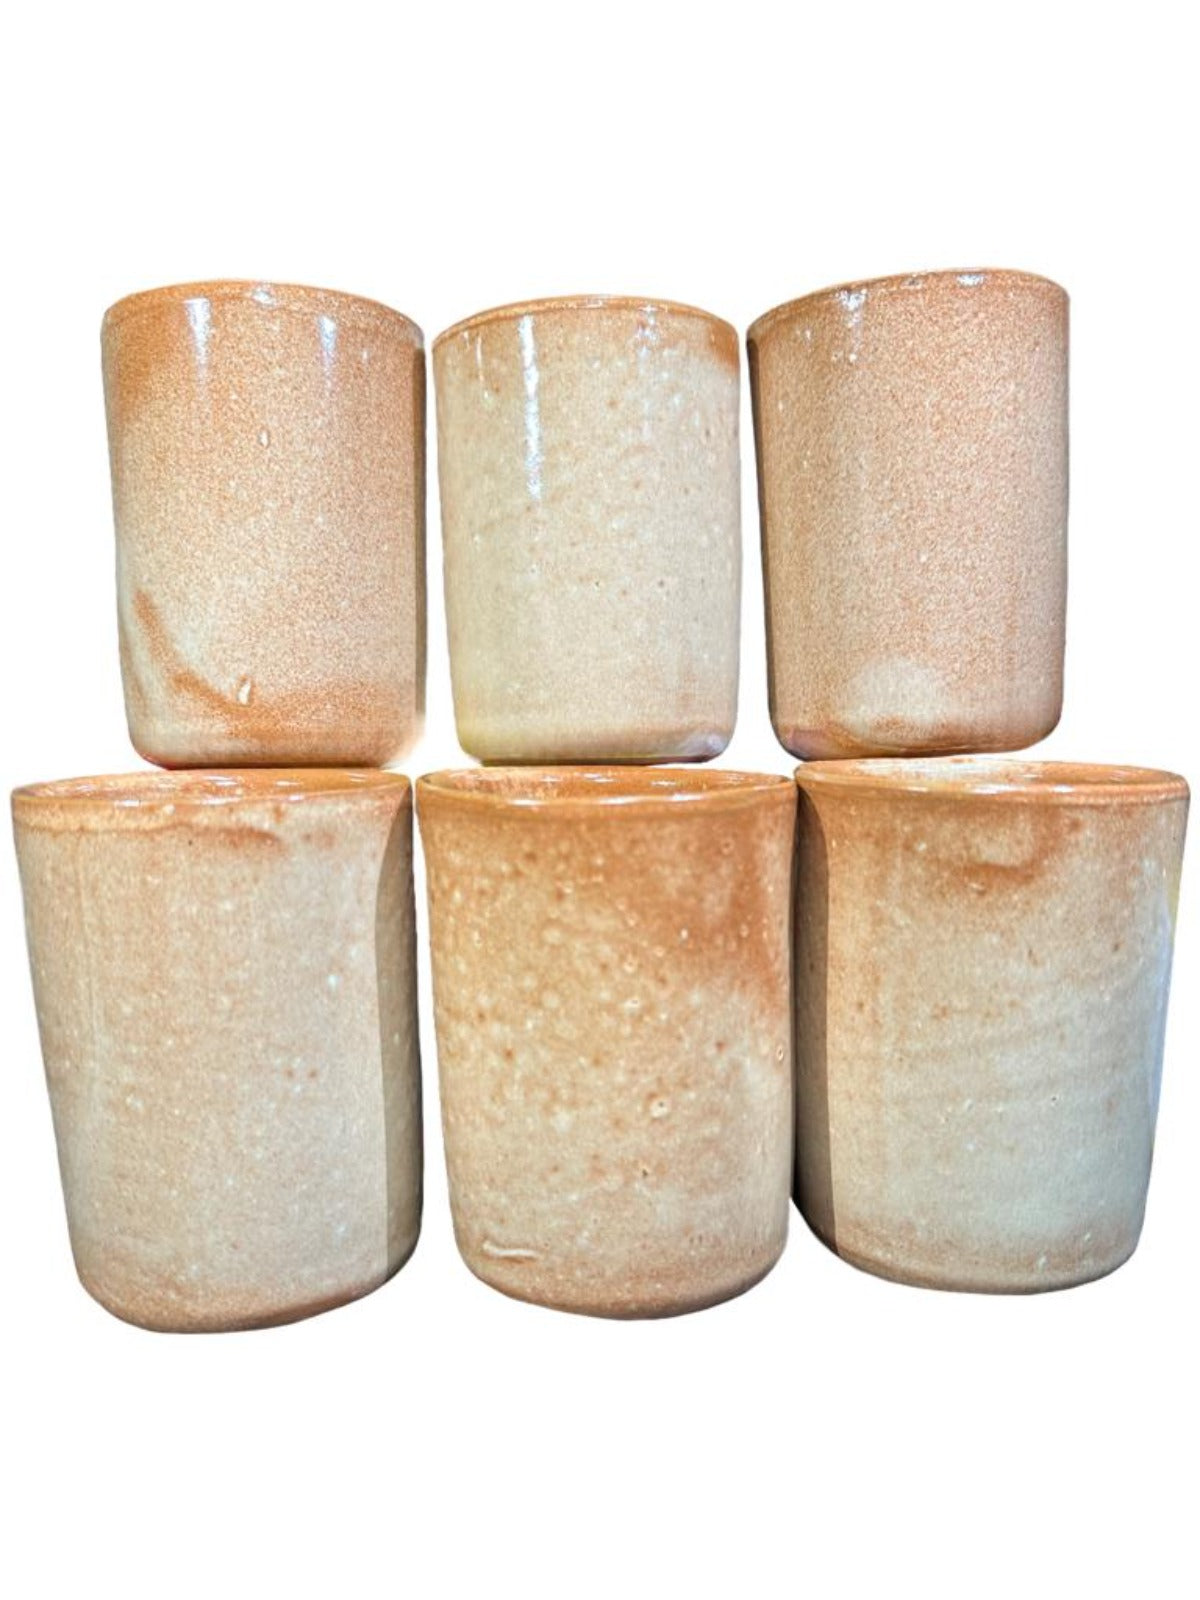 HP Padilla Spanish Terracotta Drinking Cups Stone-Wash Glaze Finish 225ml 6 Pack